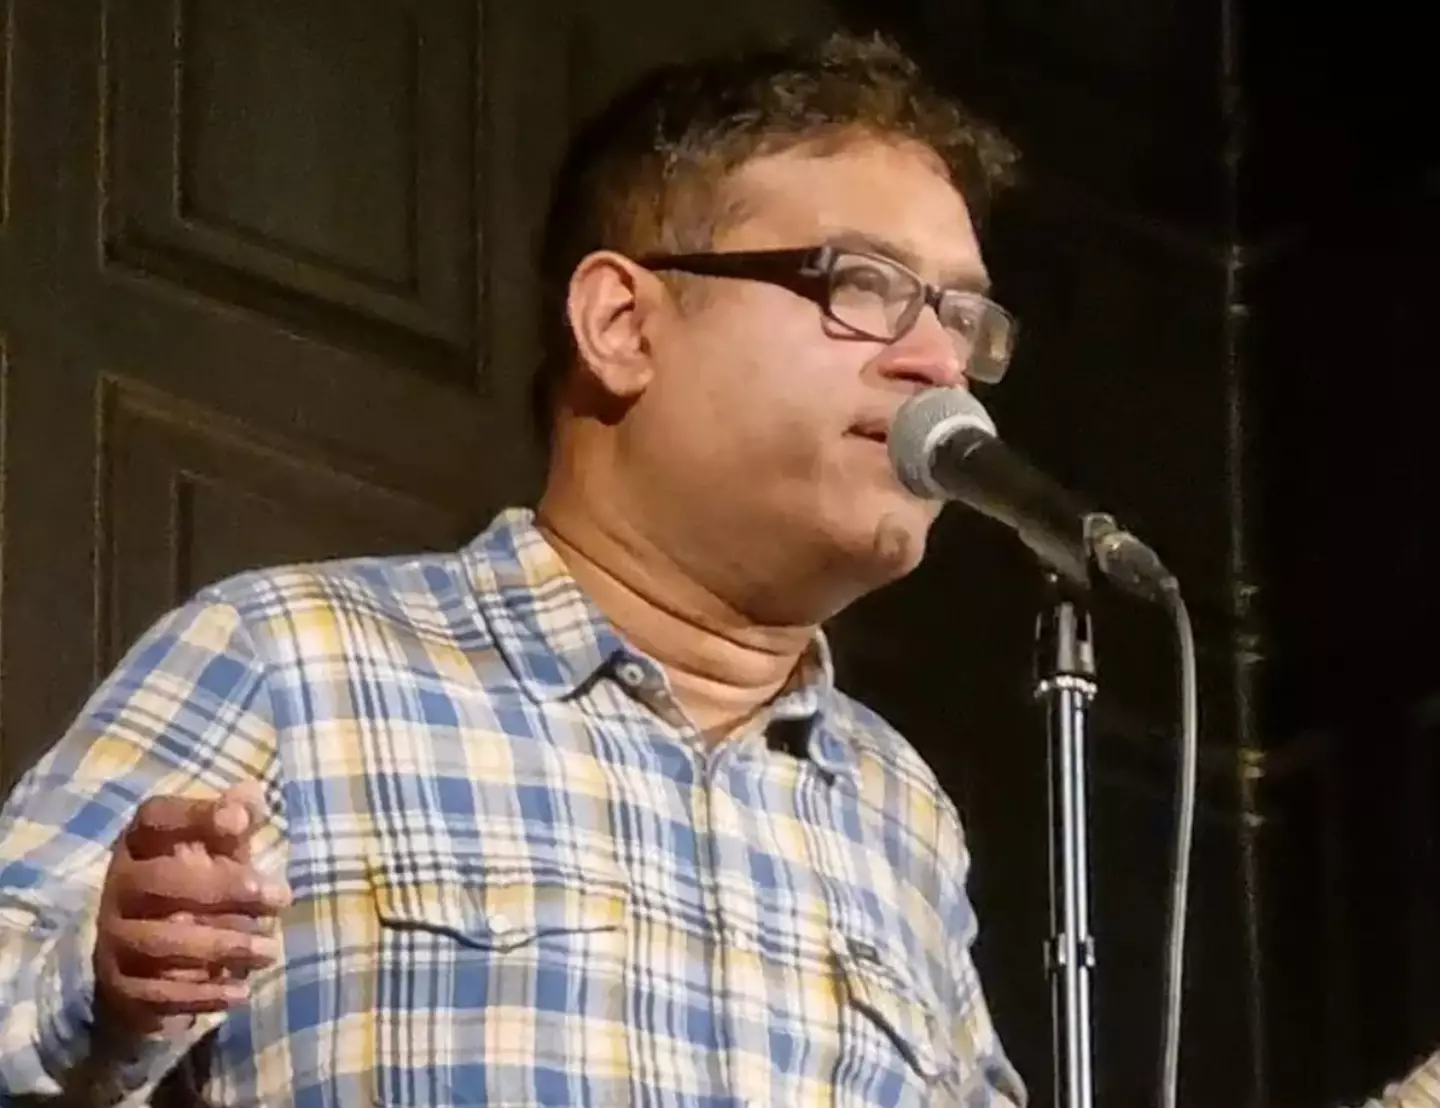 Sinha has a comedy show at the Edinburgh Fringe Festival.